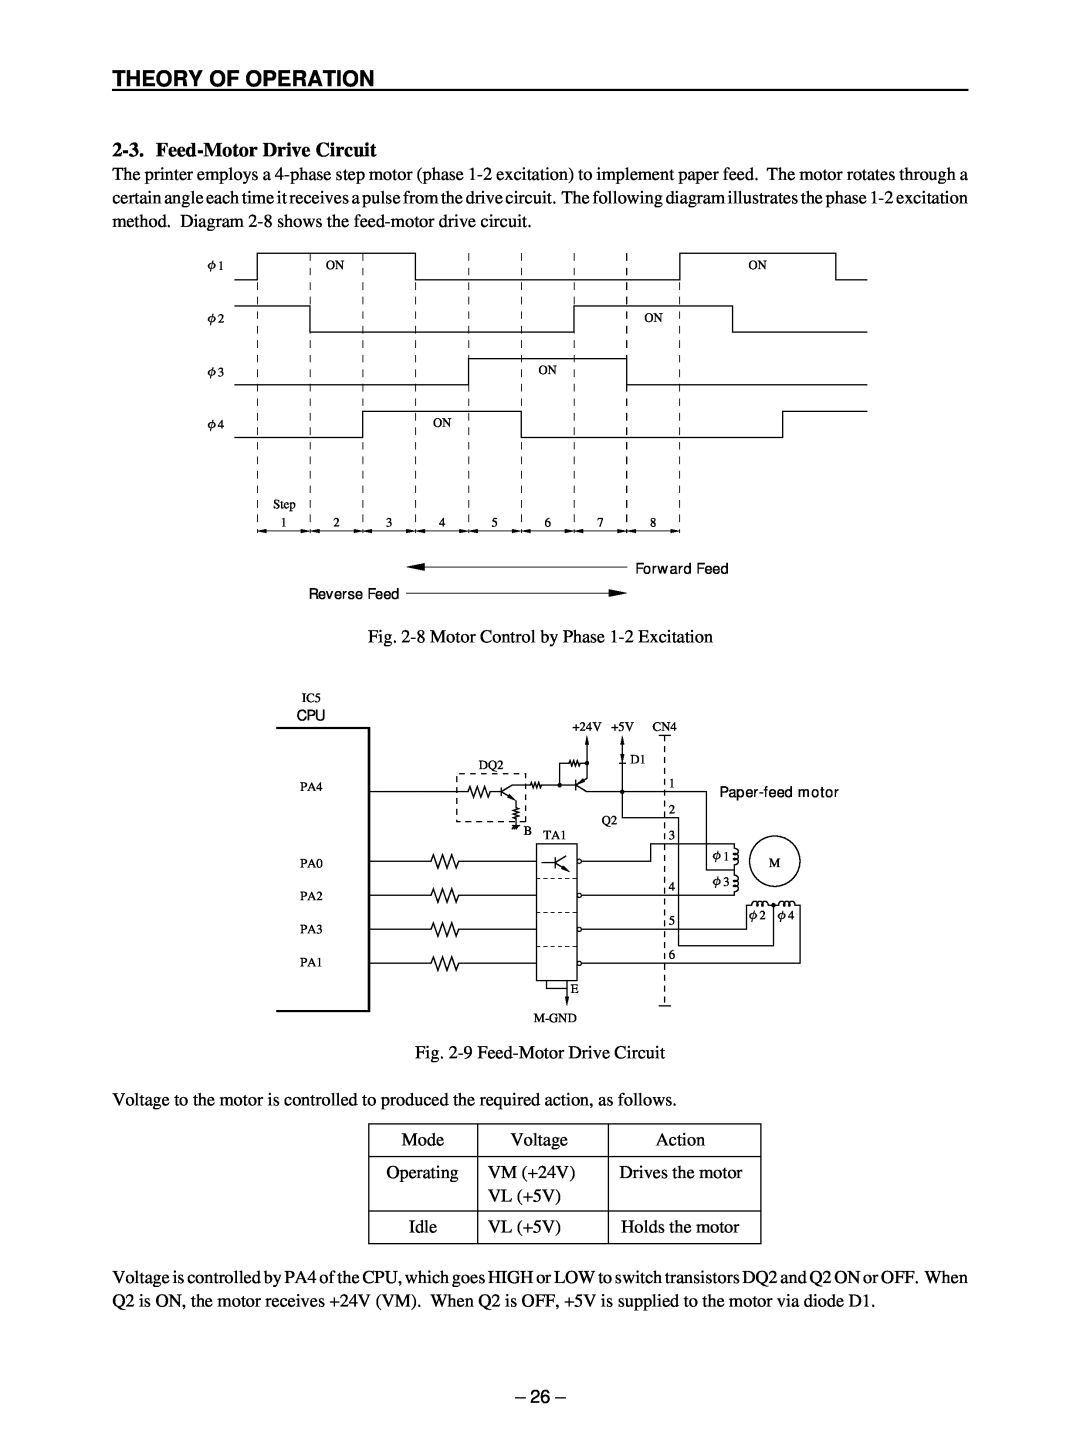 Star Micronics TSP400 technical manual Feed-Motor Drive Circuit, Theory Of Operation 